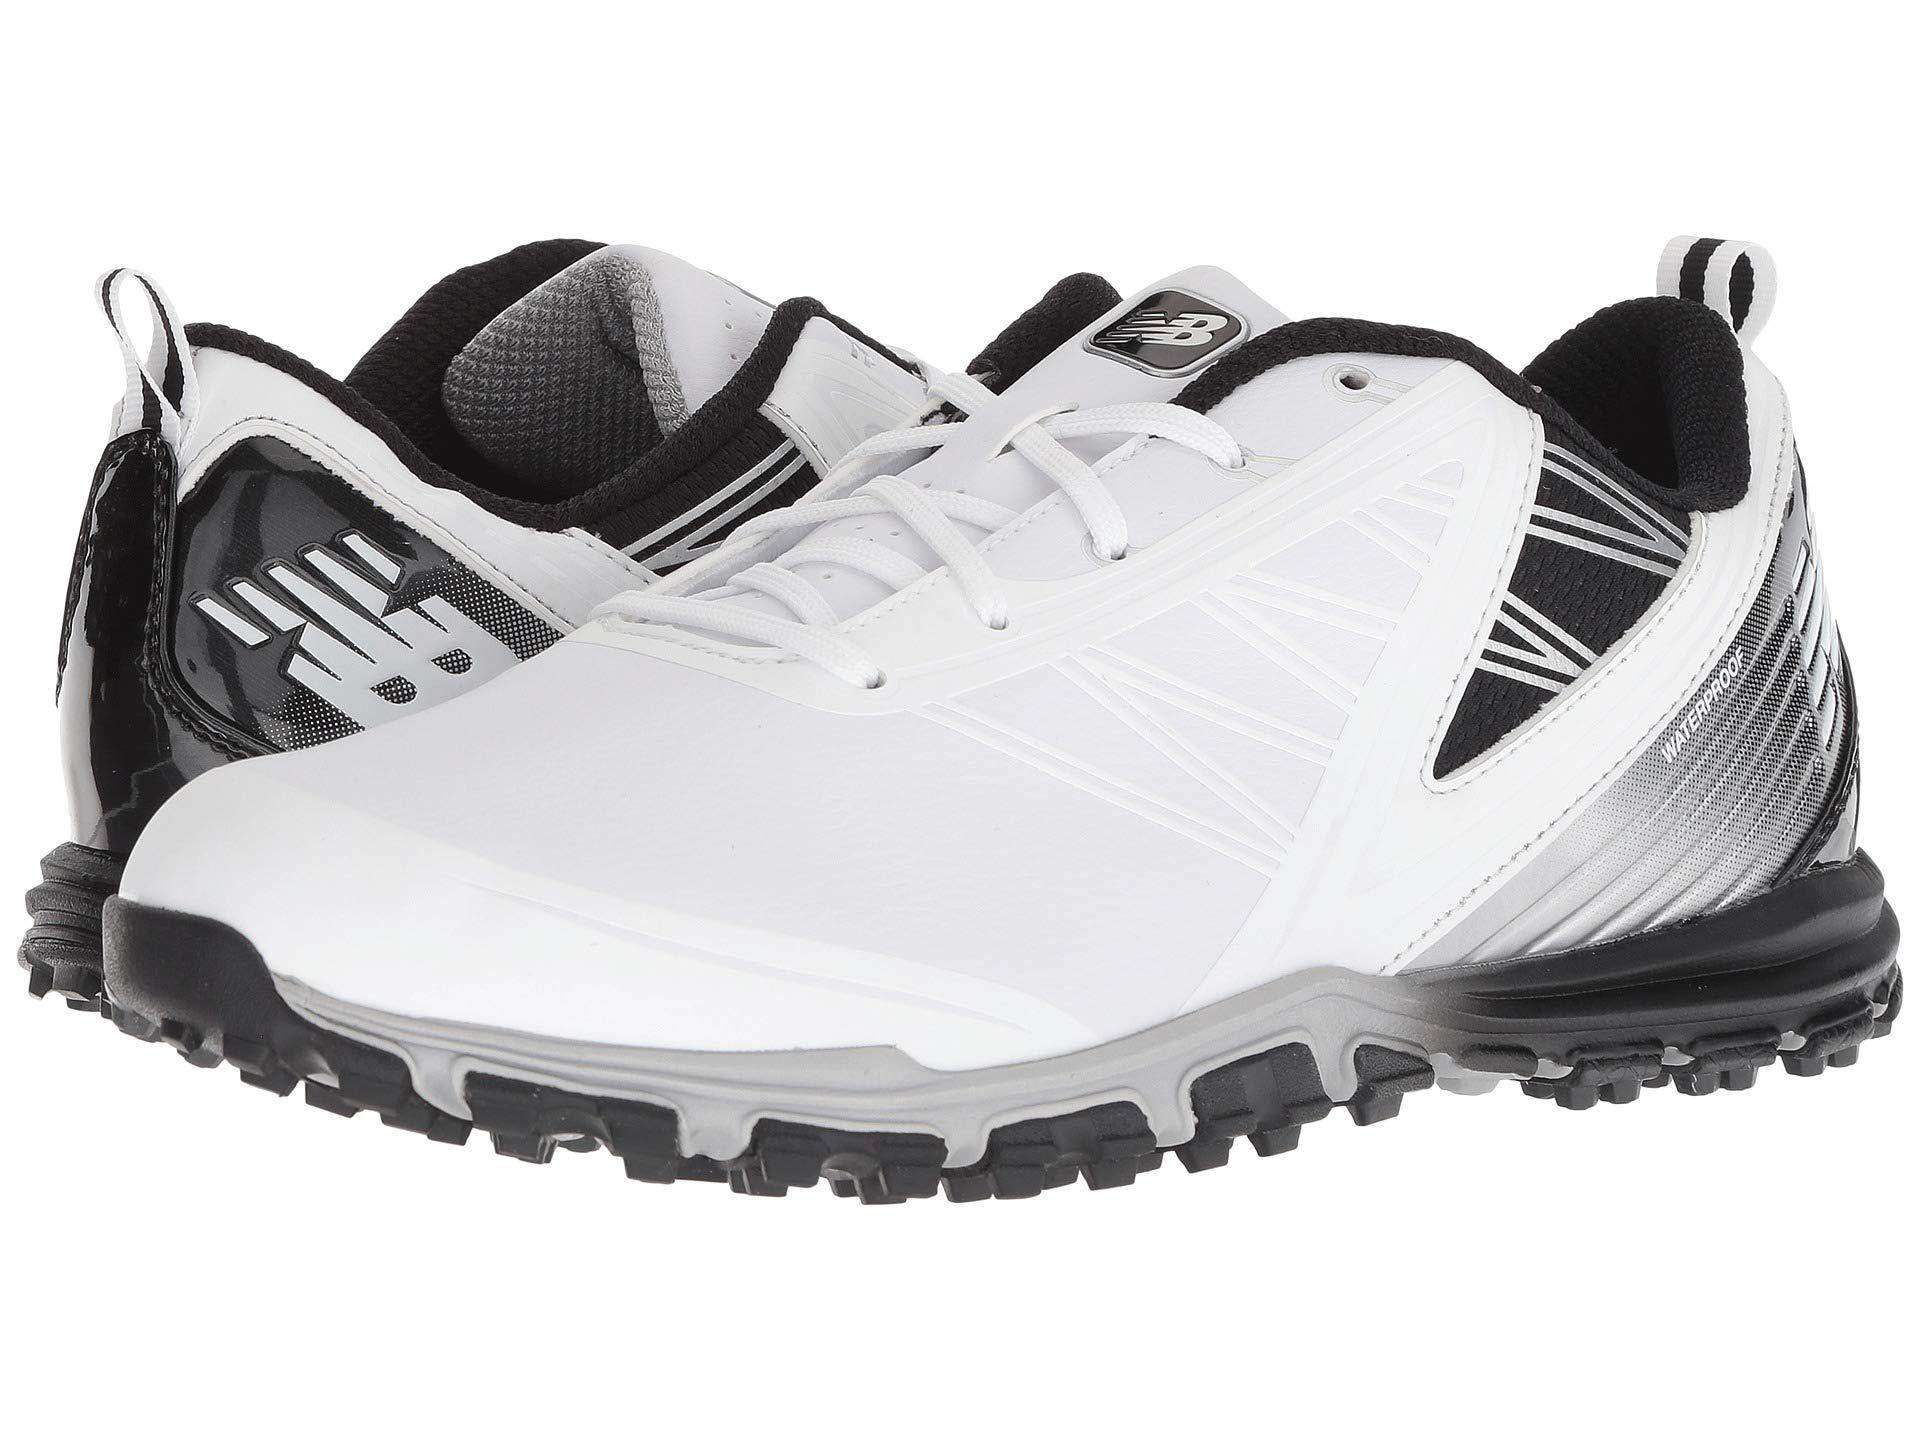 new balance minimus sl golf shoes